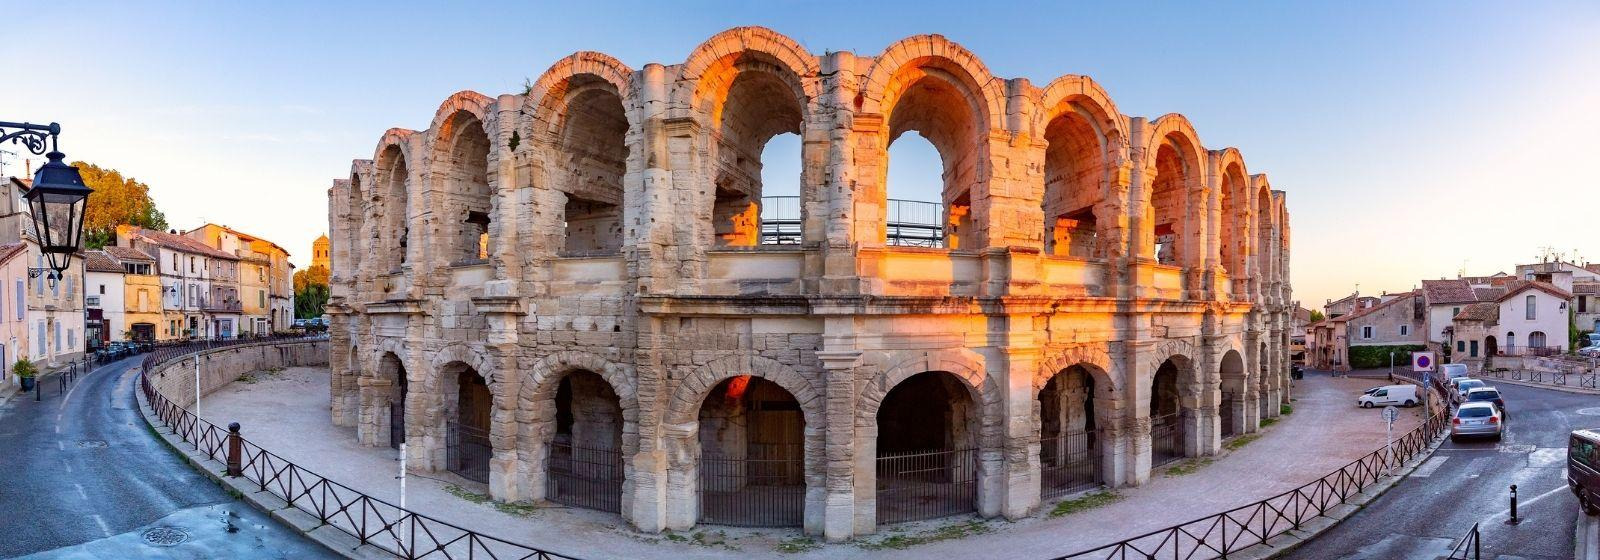 Arles, Amphitheatre